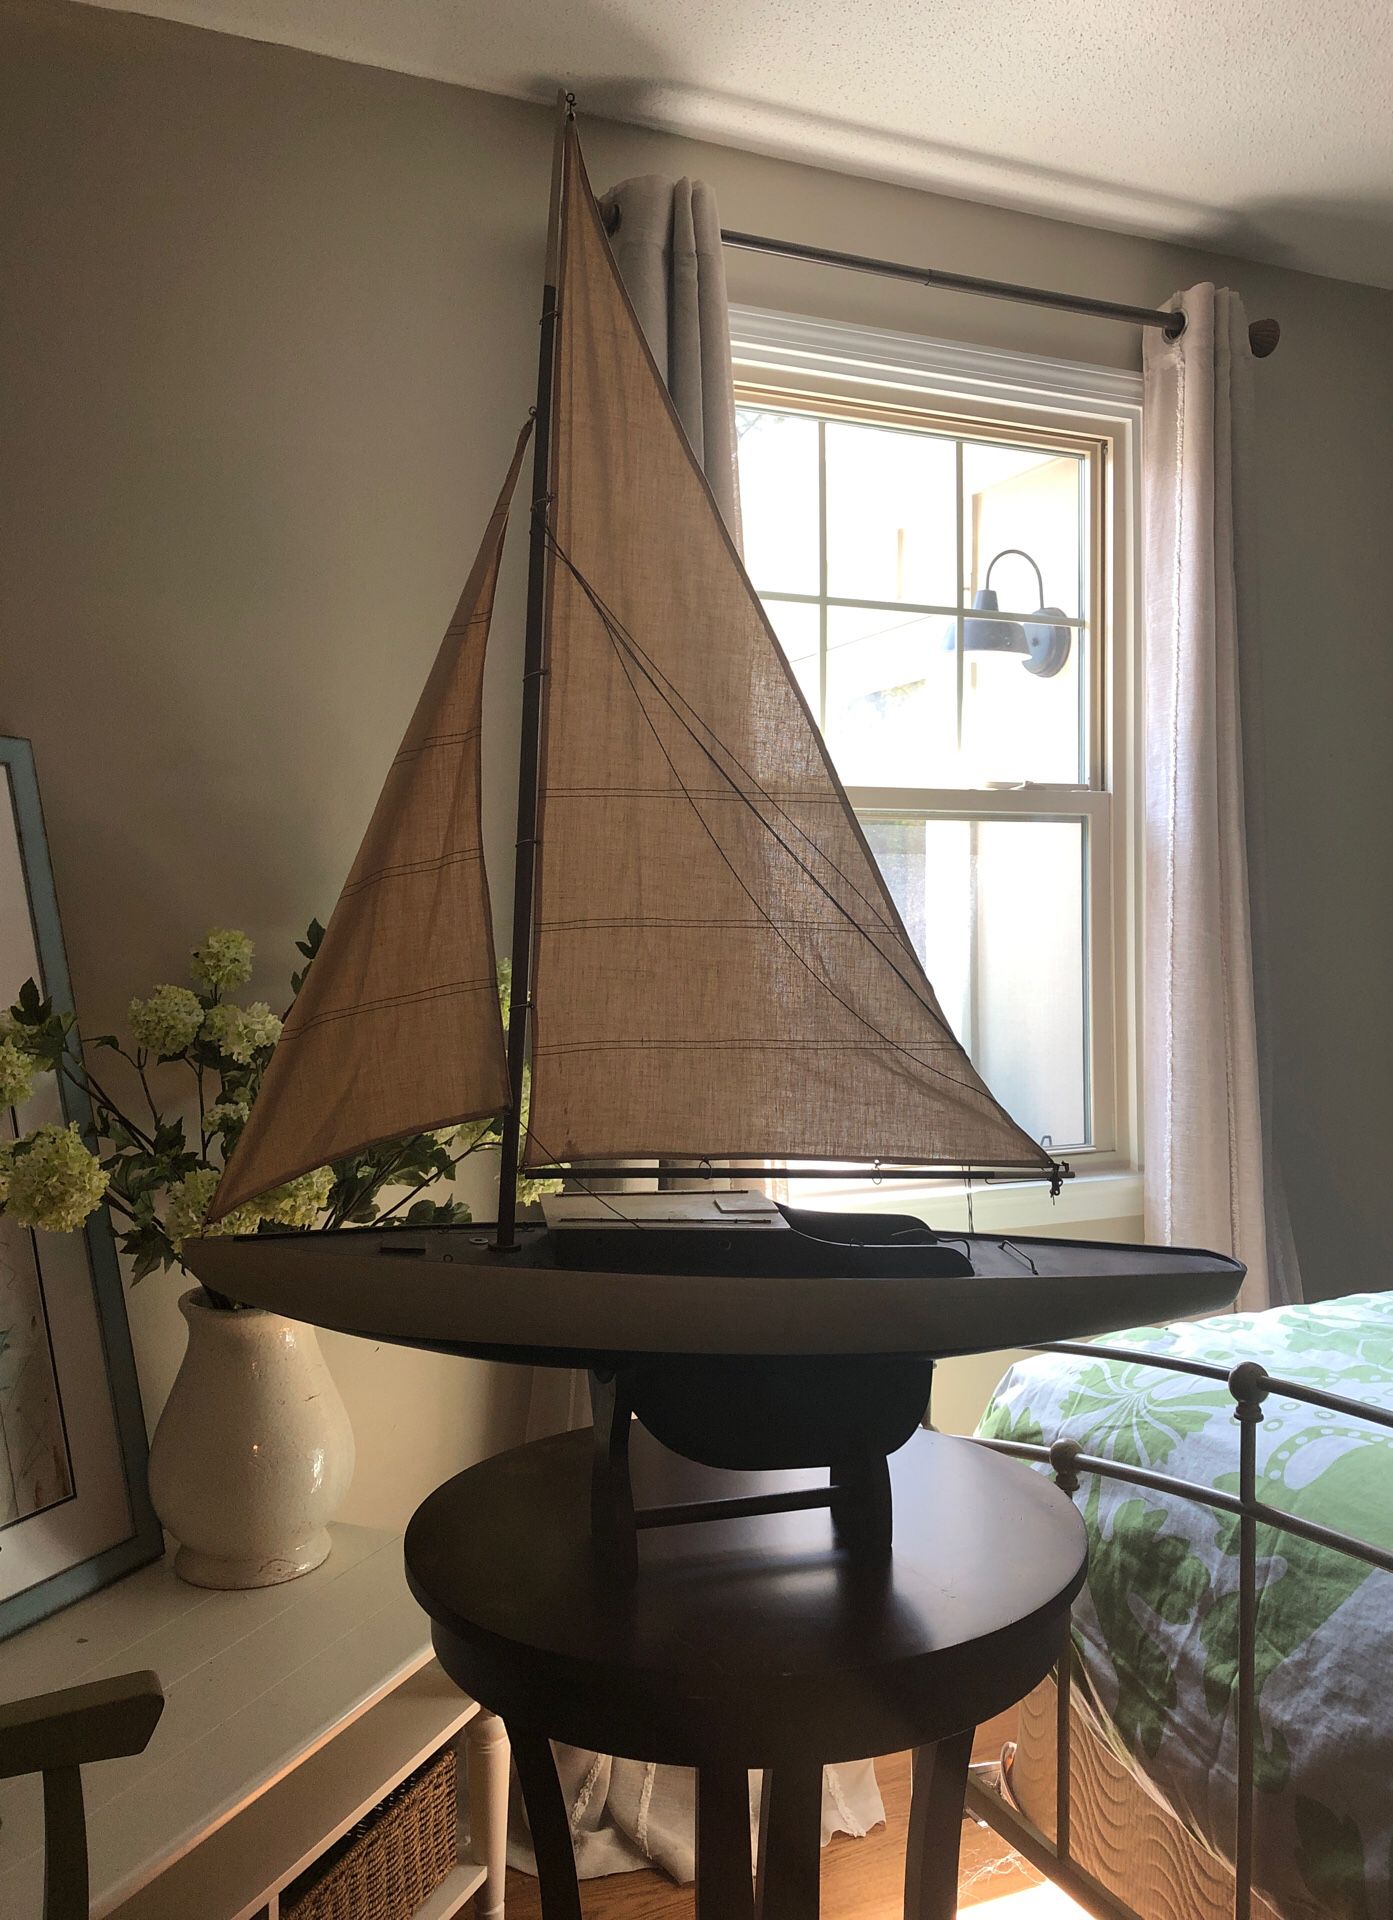 Model wooden sailboat.